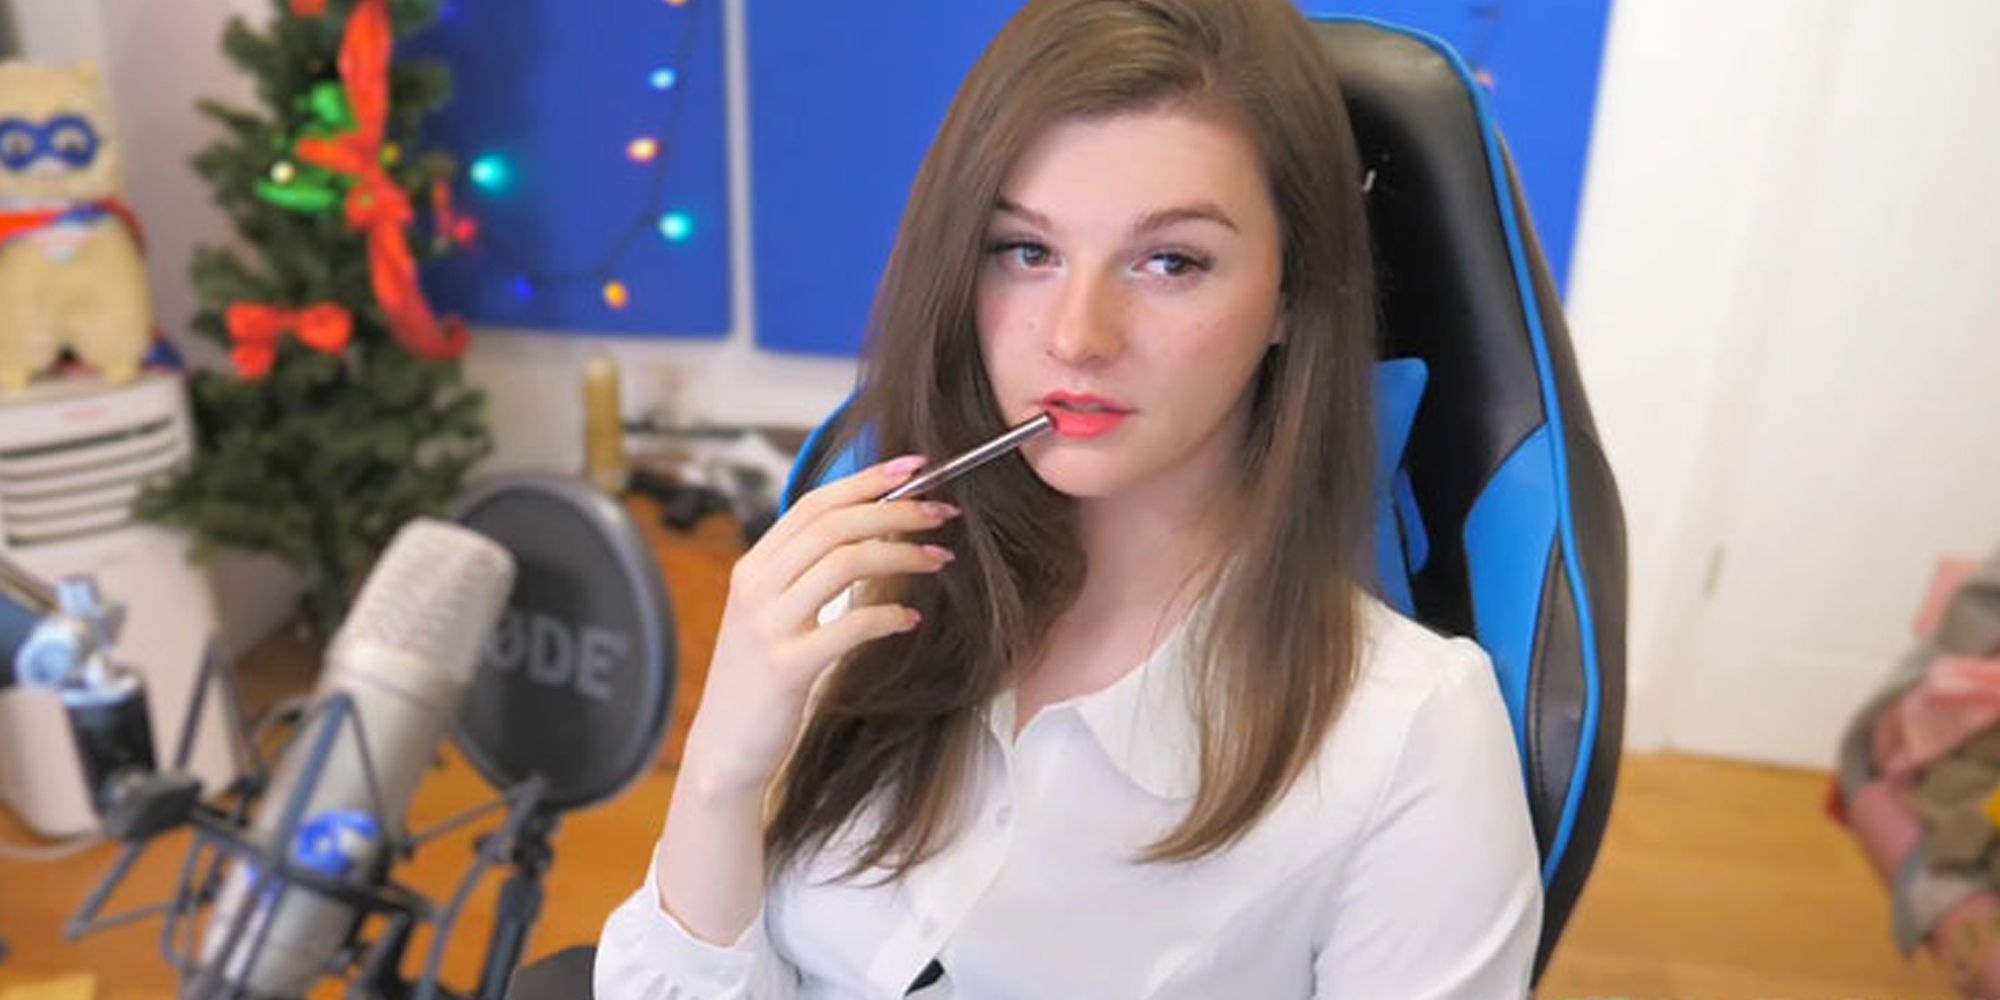 FINNSTER applying lipstick in their gaming chair